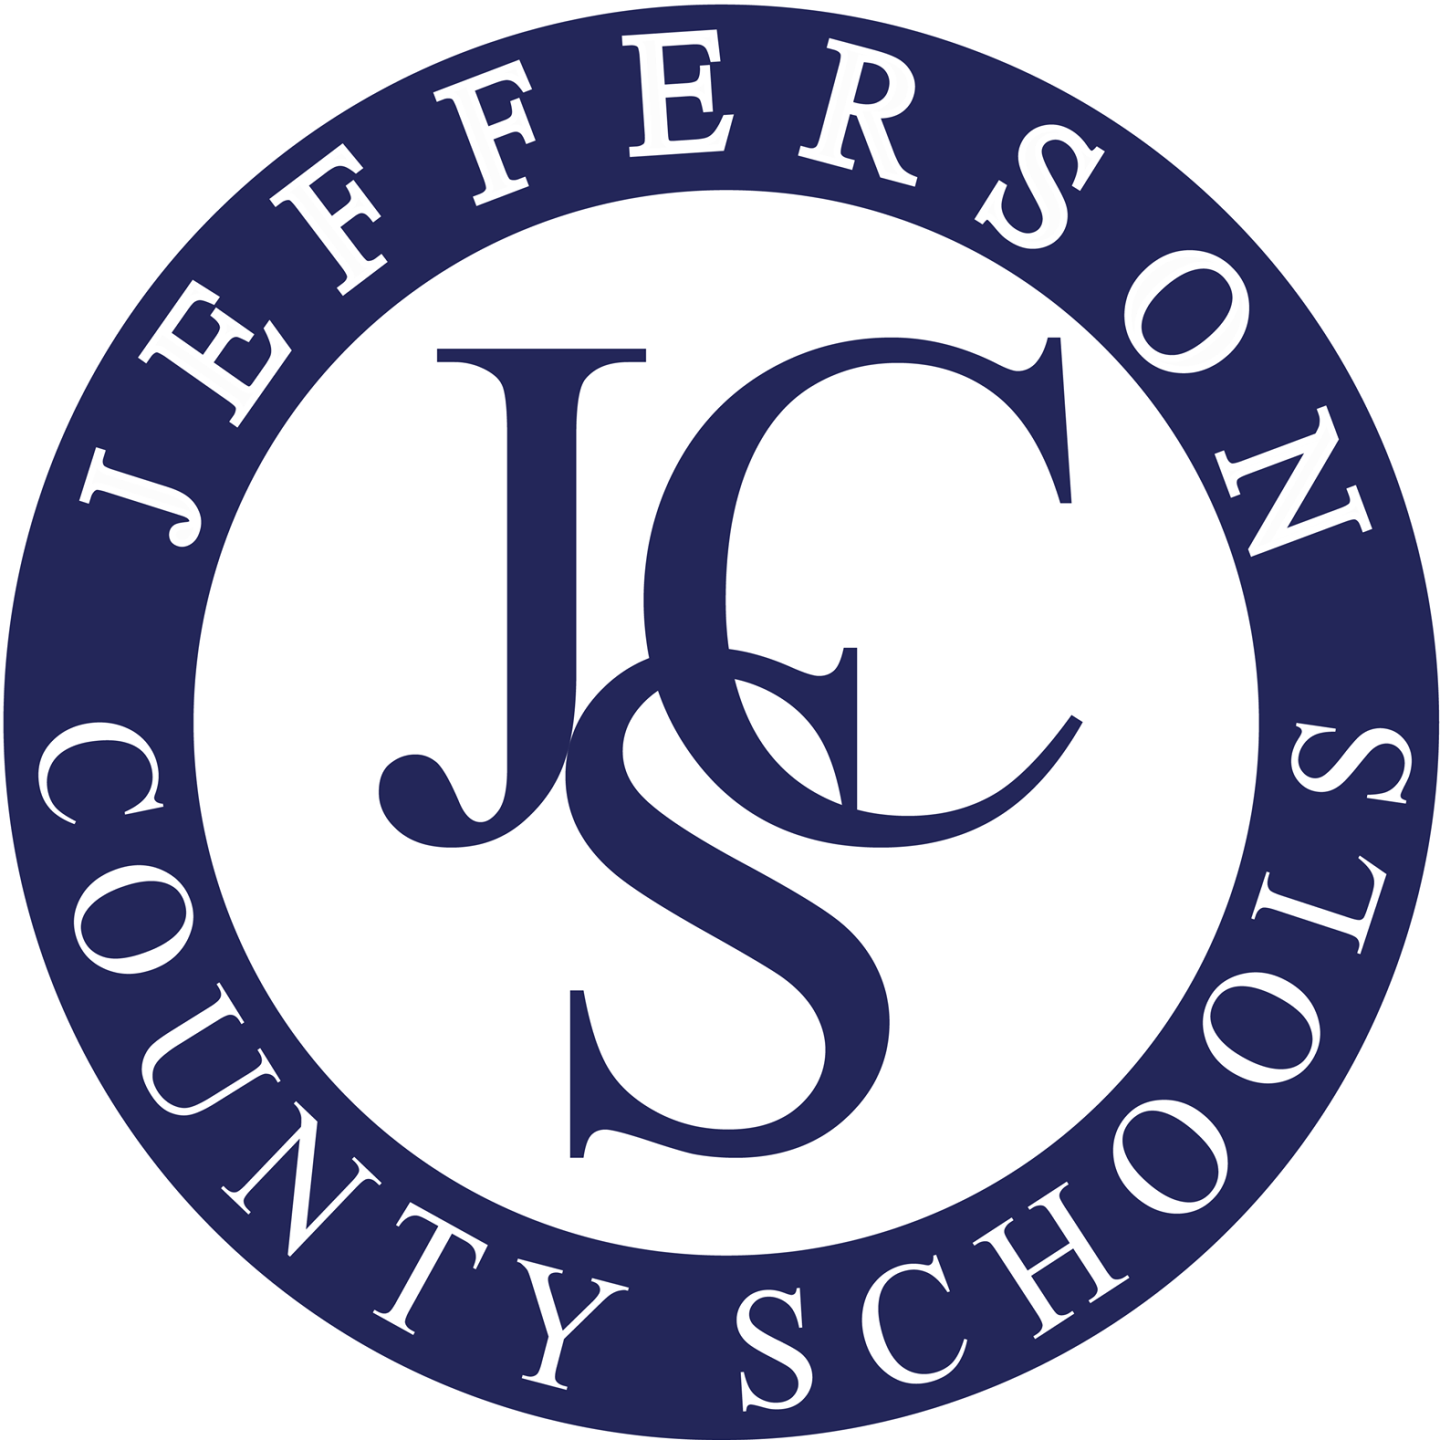 jefferson township high school senior priveledges